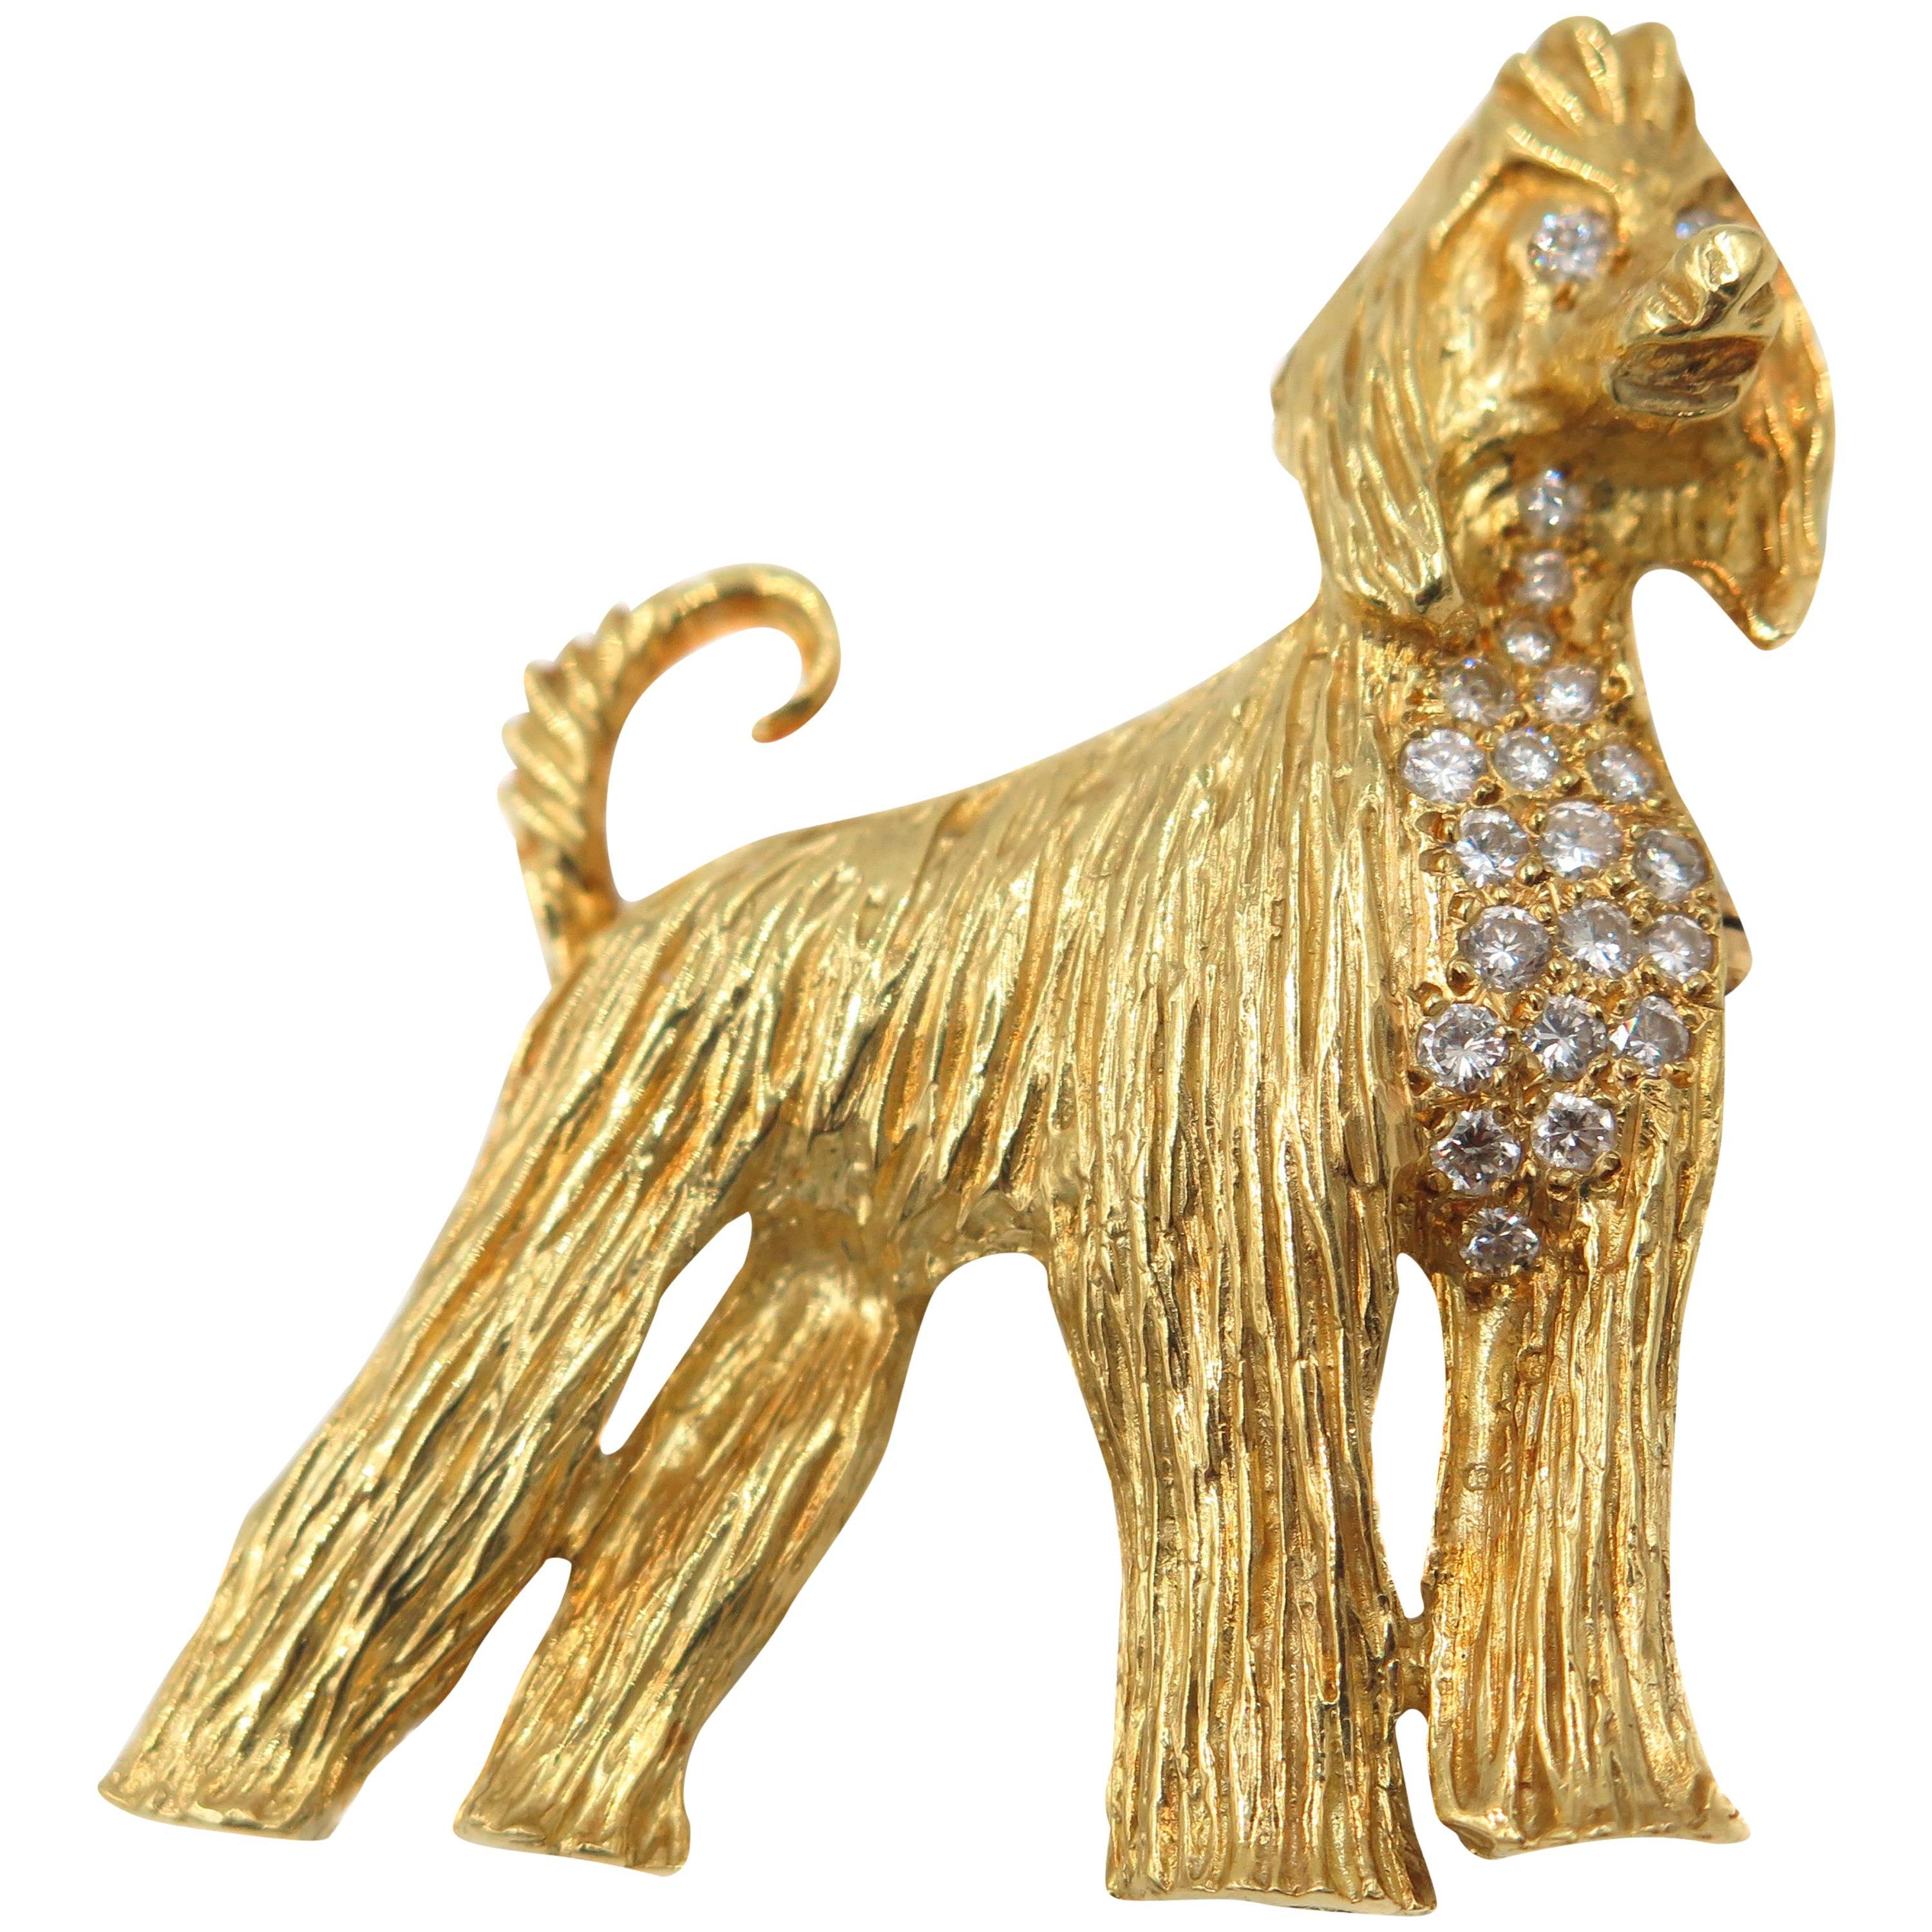 Afghan Hound Dog 18 Karat Yellow Gold Brooch